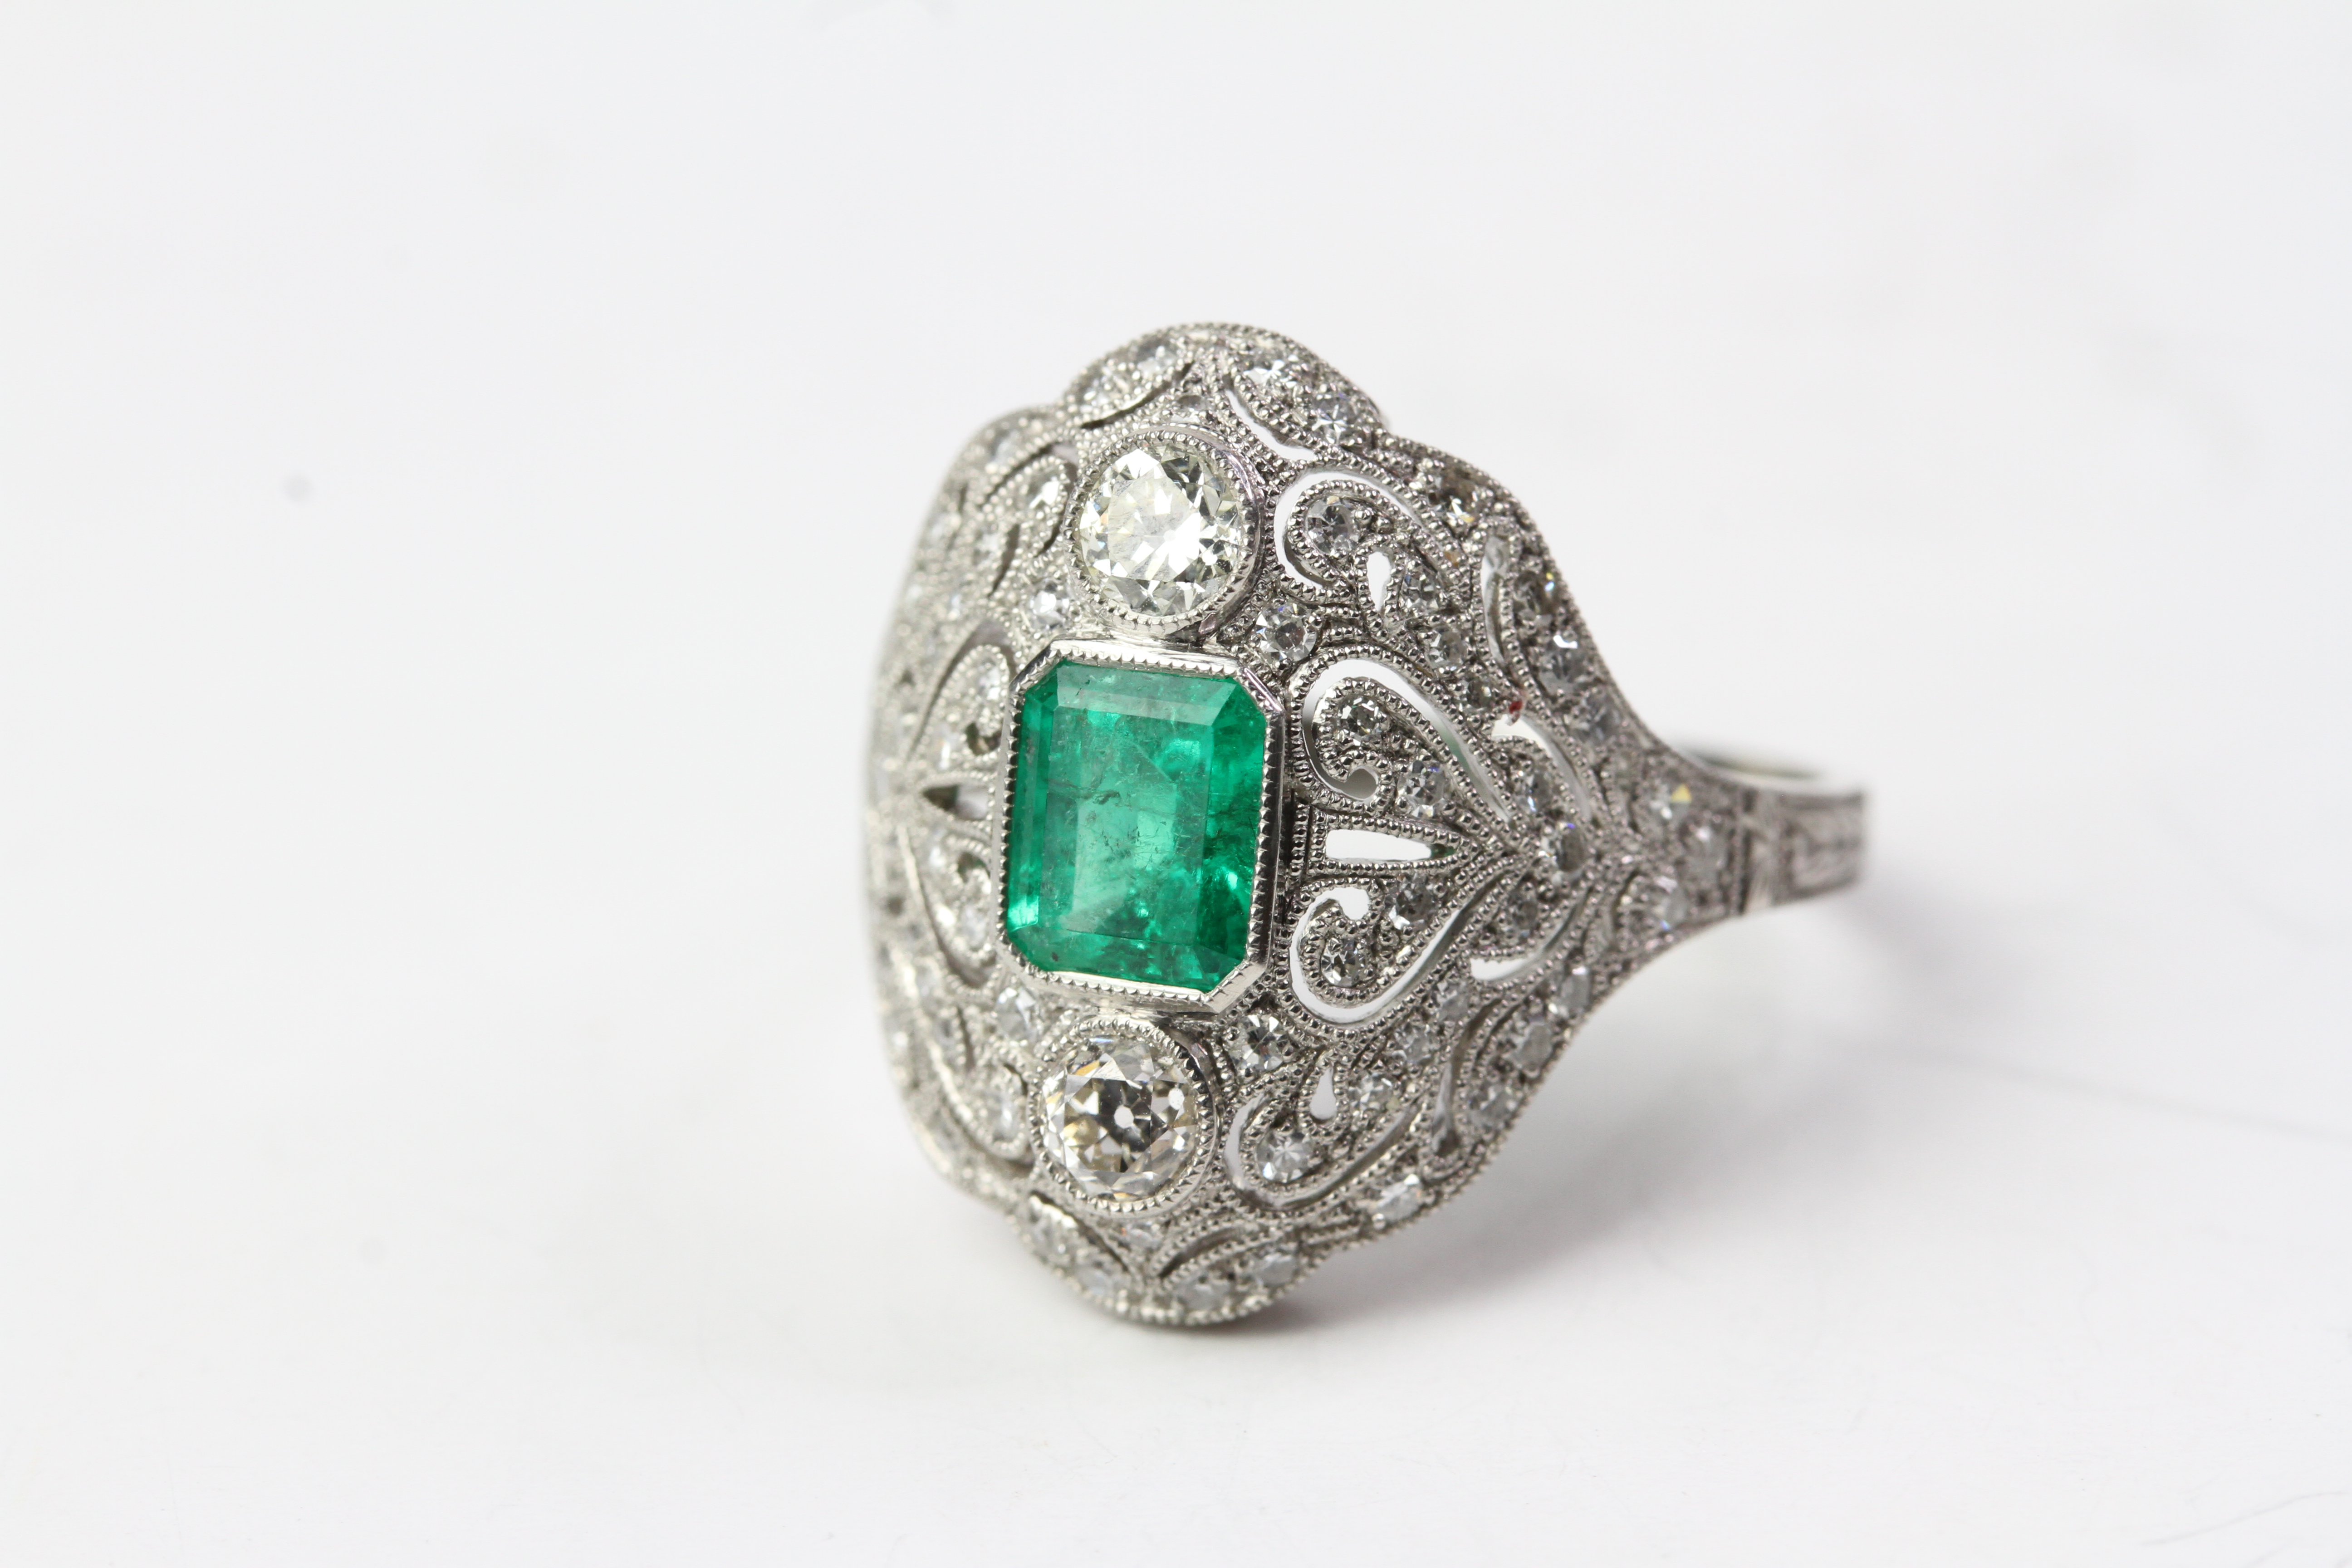 Platinum dress ring columbian emerald and diamond - bombe style with raised emerald between 2